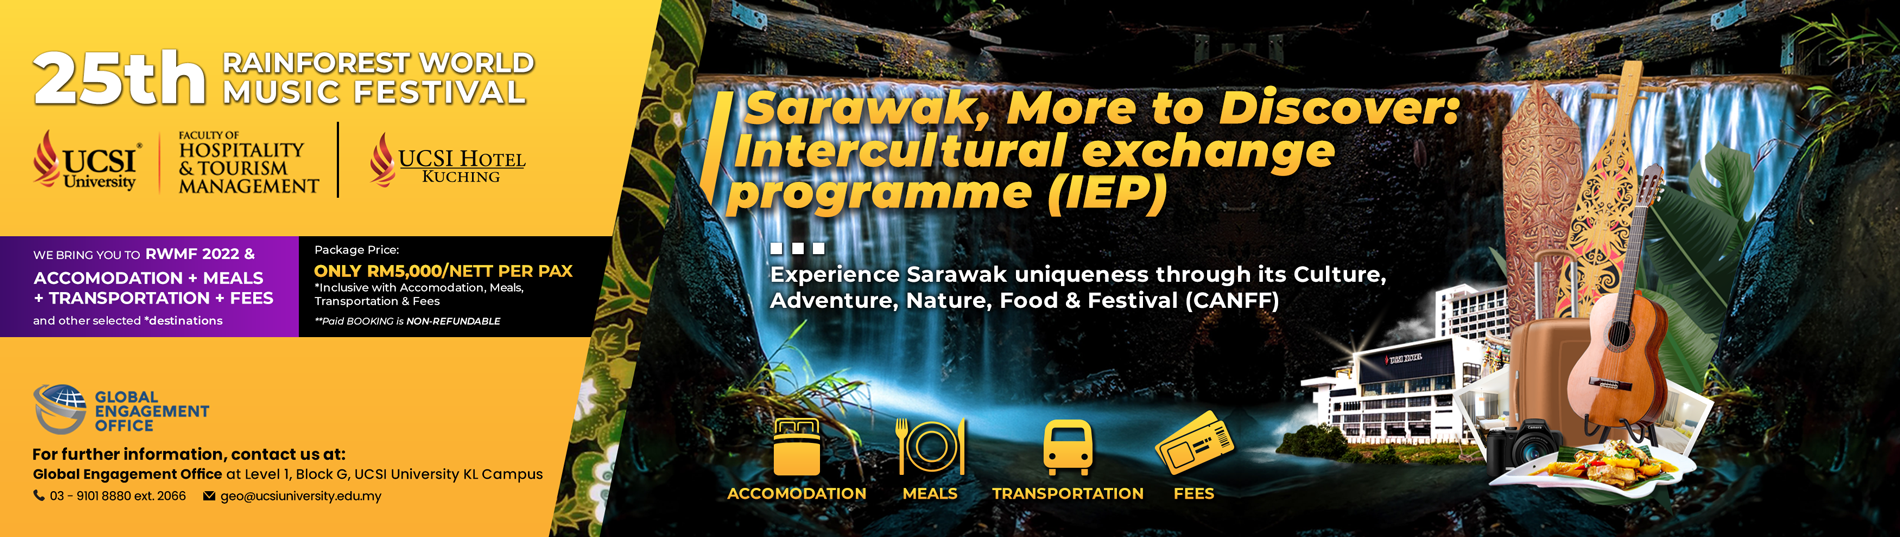 Sarawak, more to discover intercultural exchange programme